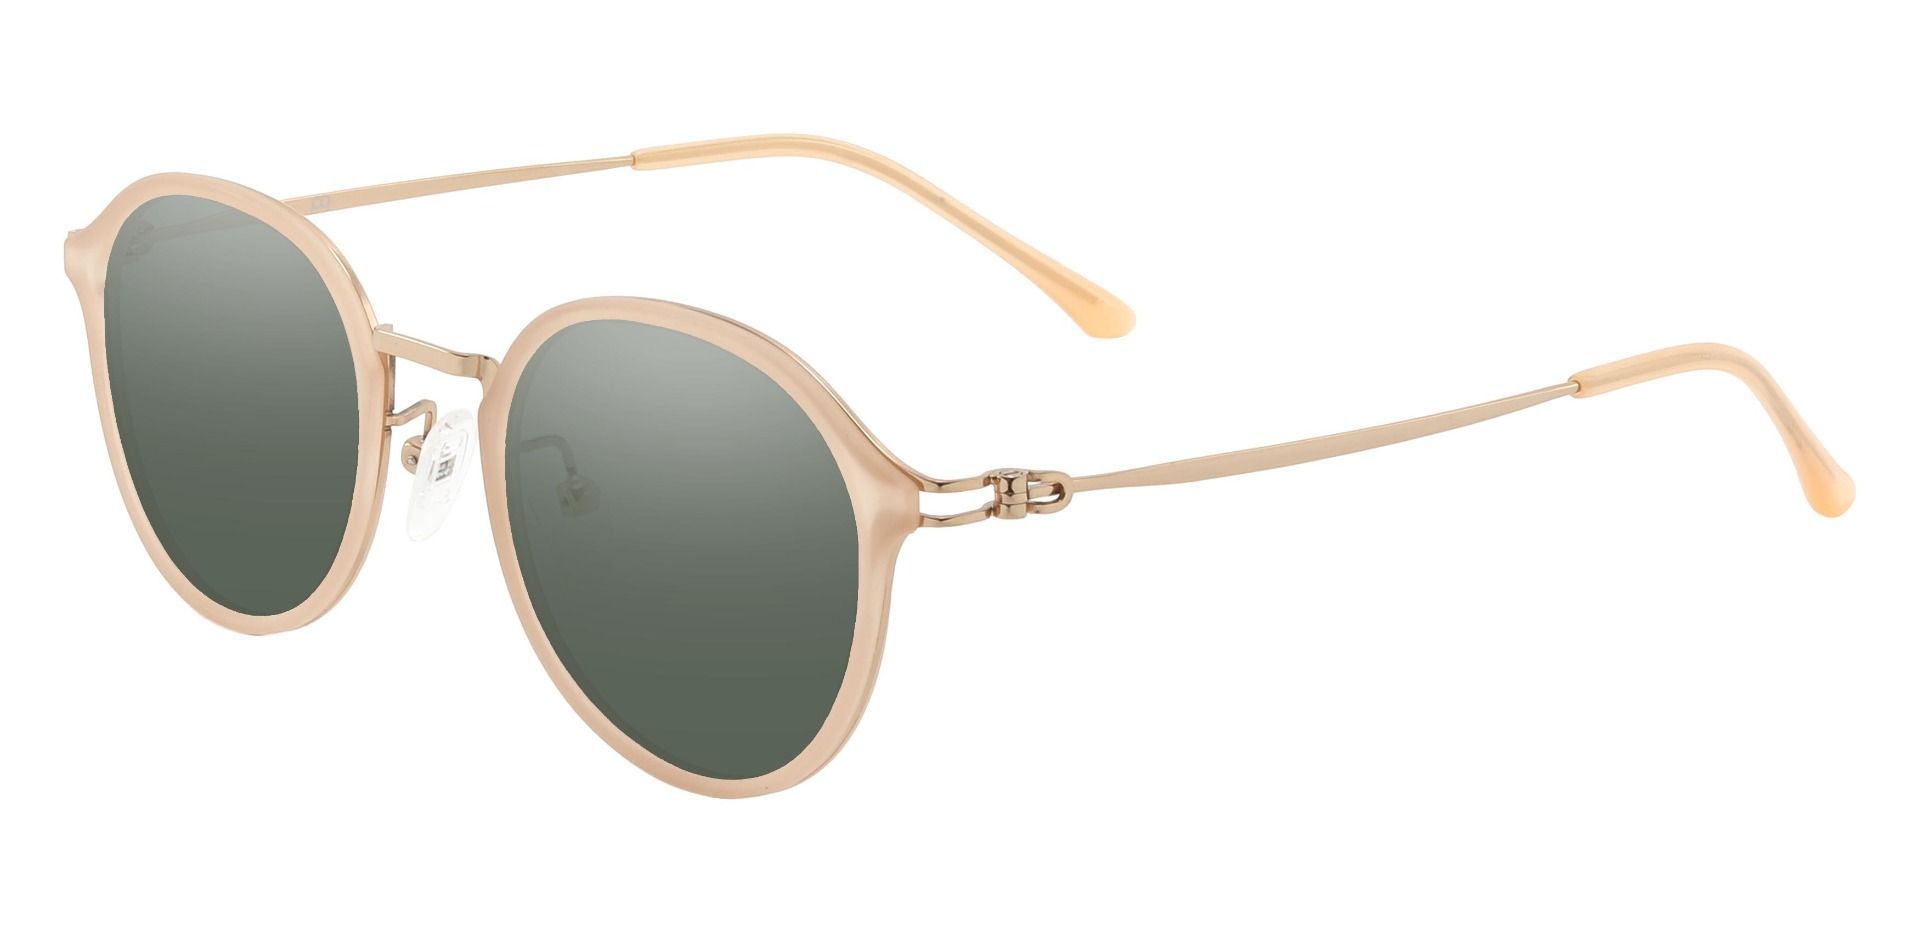 Billings Round Prescription Sunglasses - Brown Frame With Green Lenses